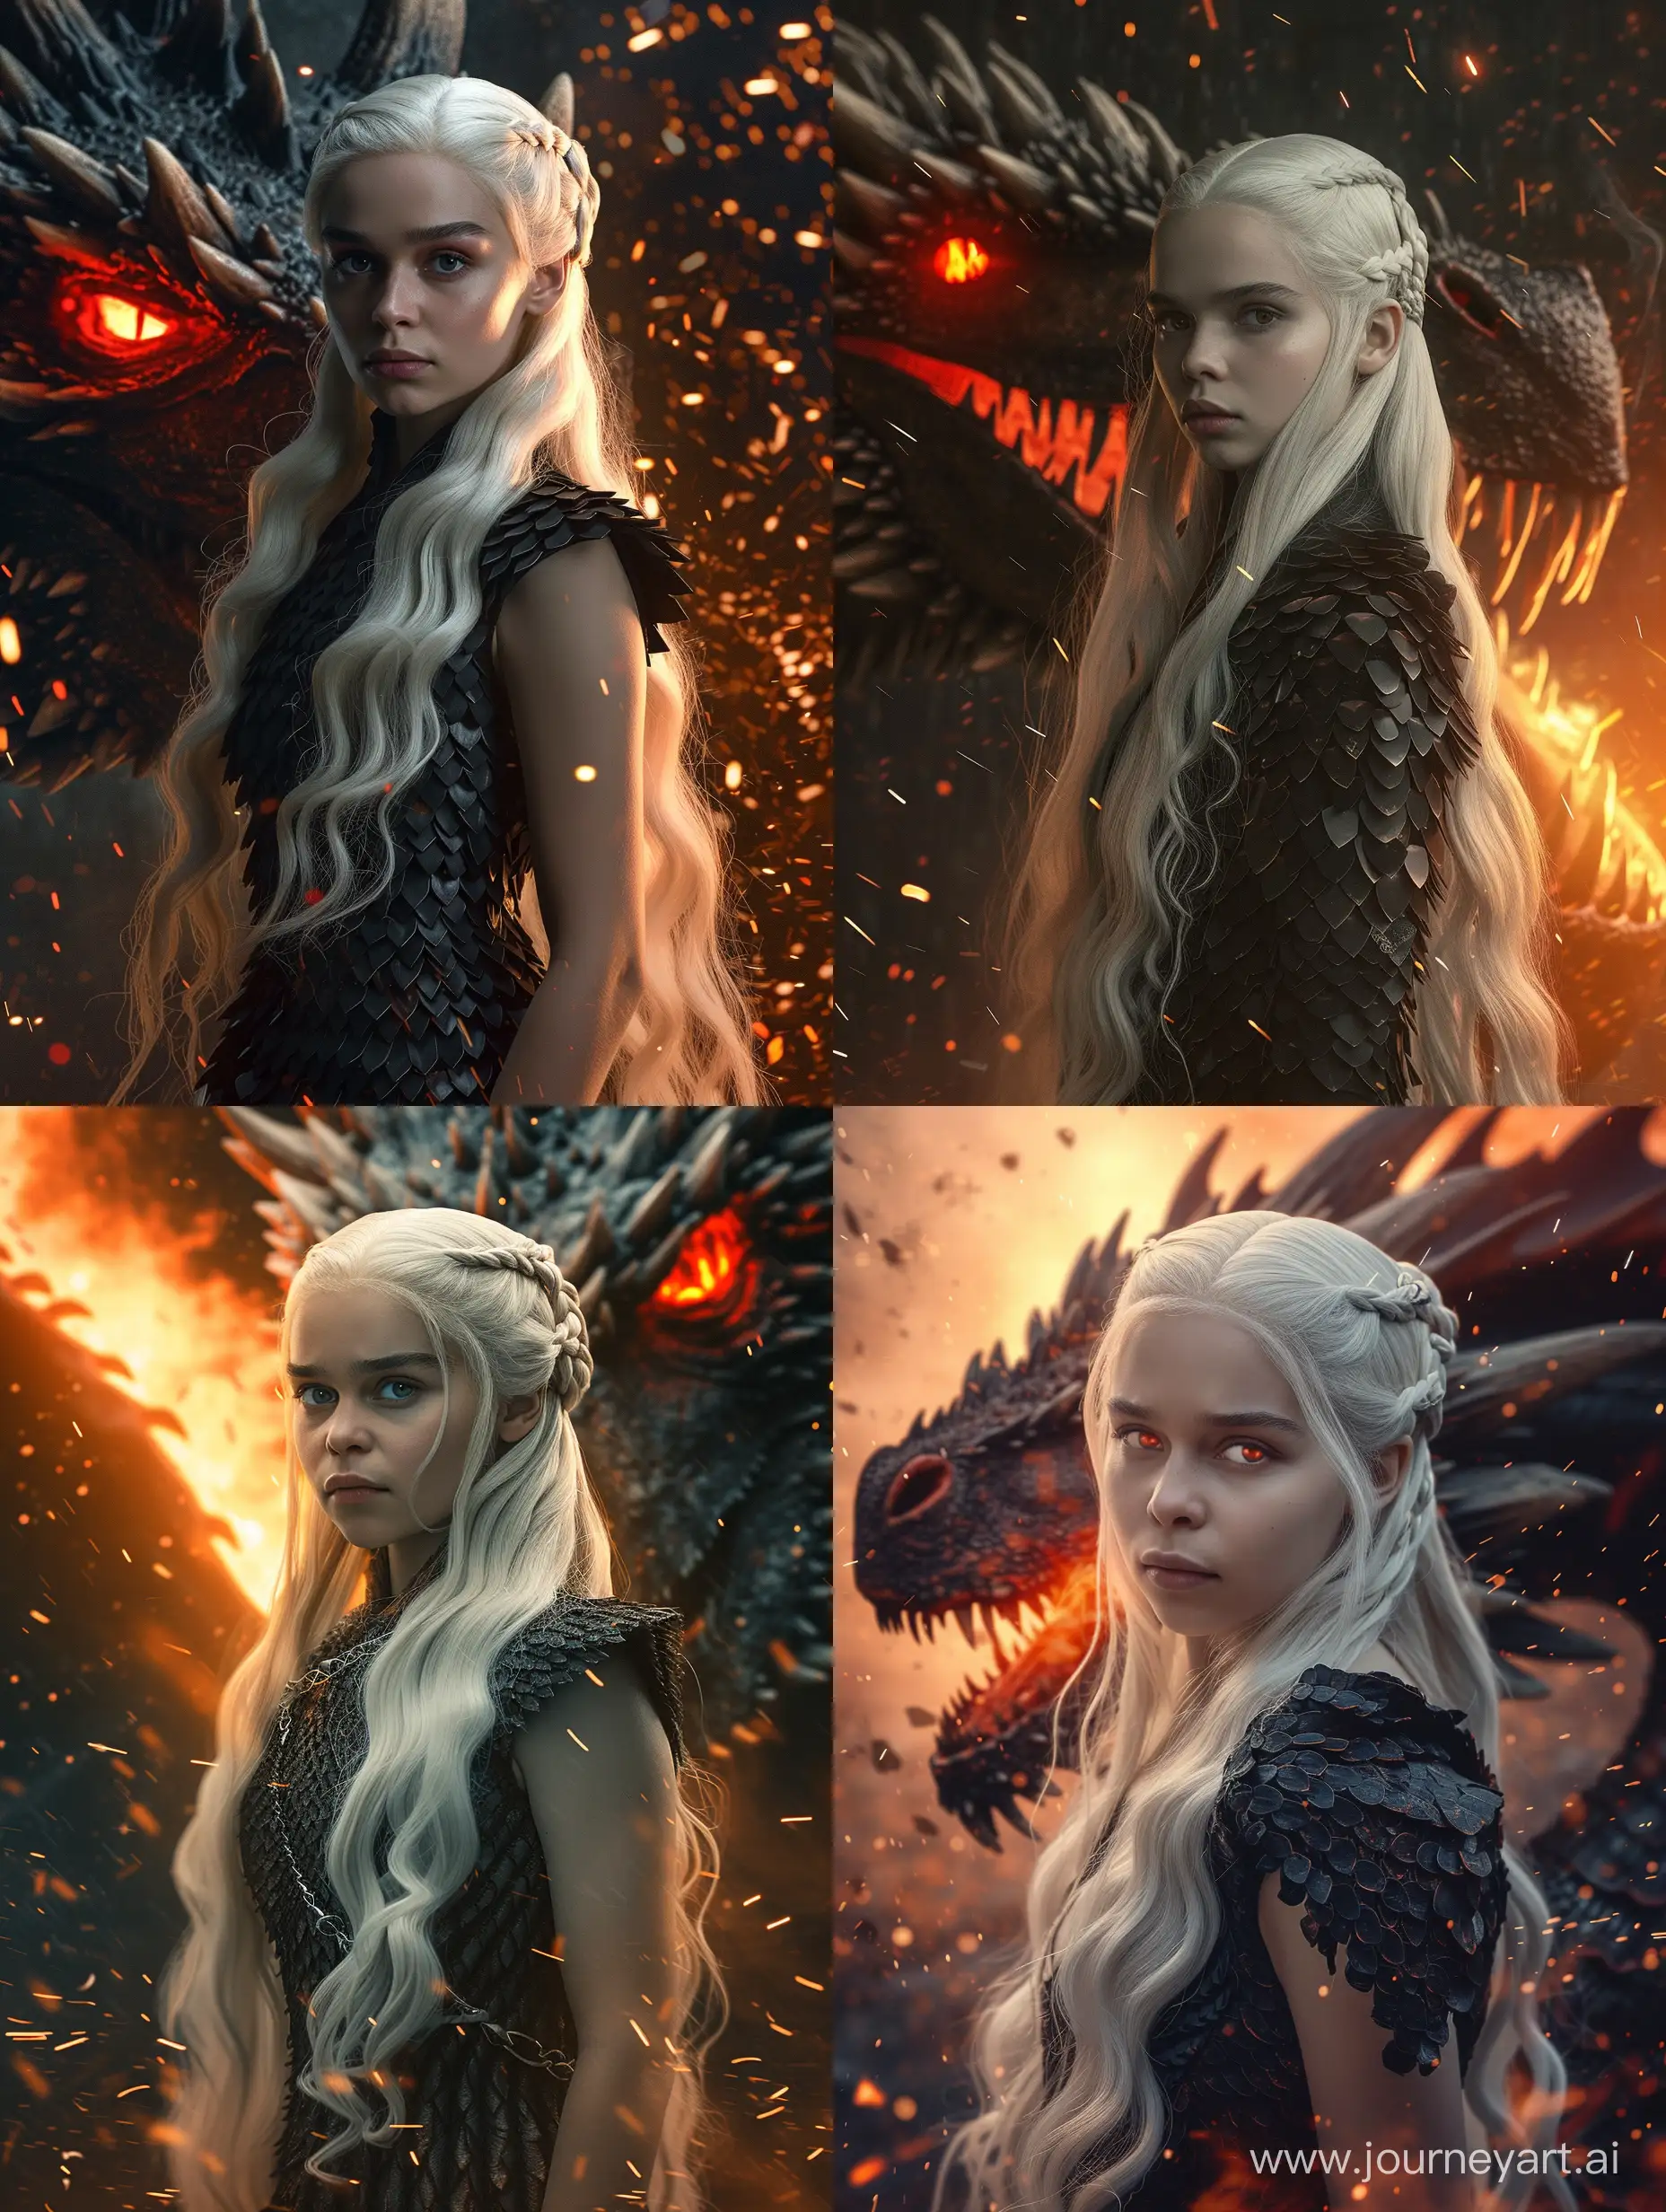 Mia-Goth-as-Targaryen-Girl-DragonScale-Dress-in-Game-of-Thrones-Style